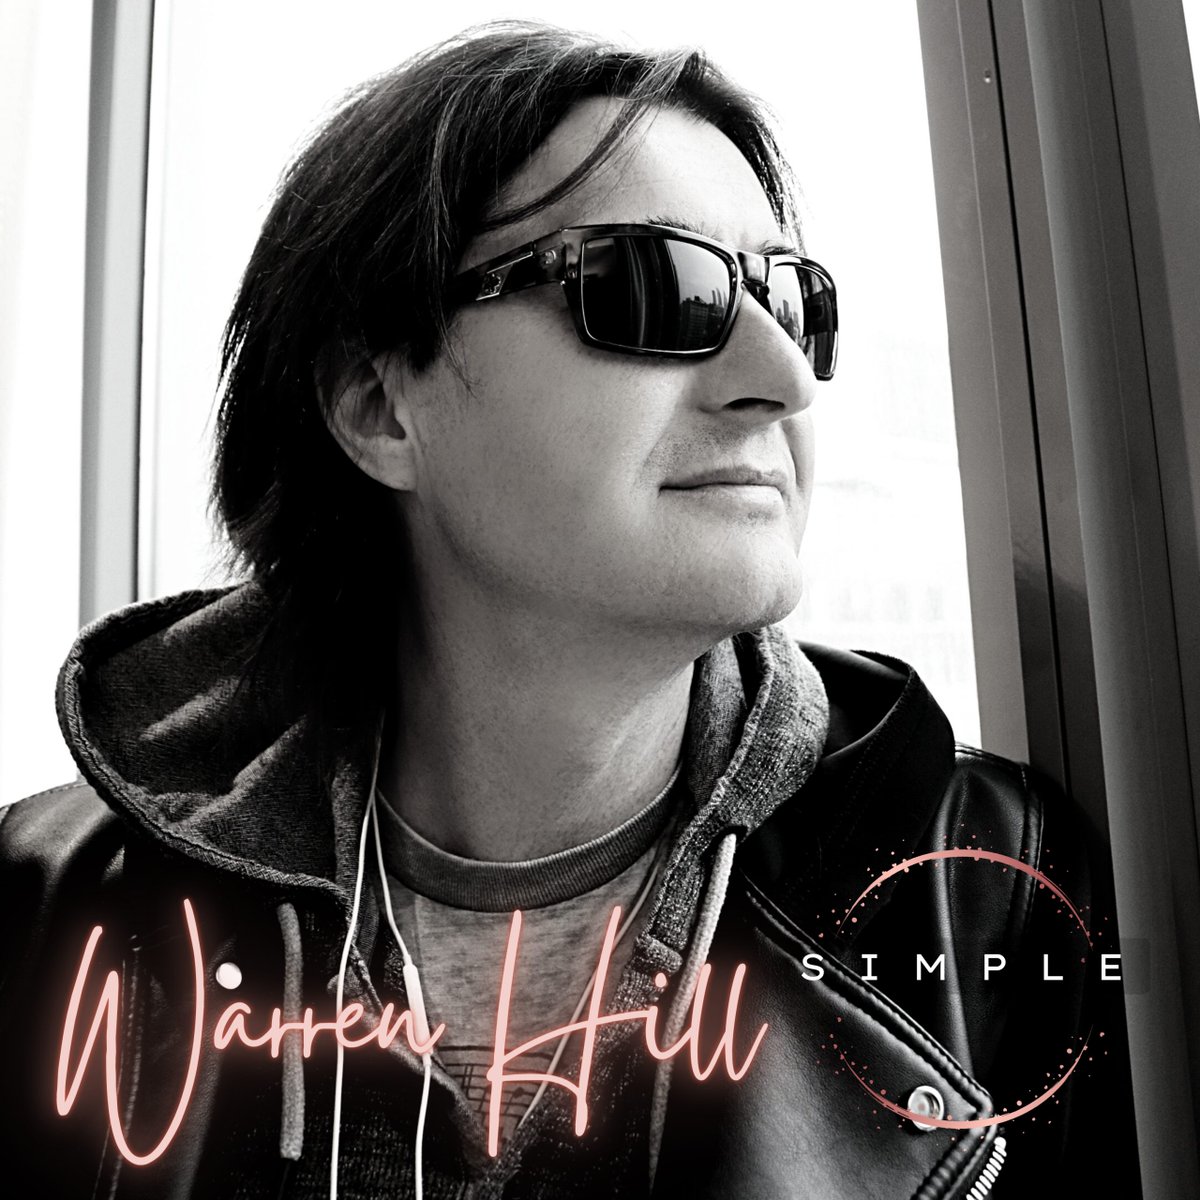 Warren Hill 'Simple' - LISTEN
#warrenhill

thejazzworld.com/warren-hill-si…